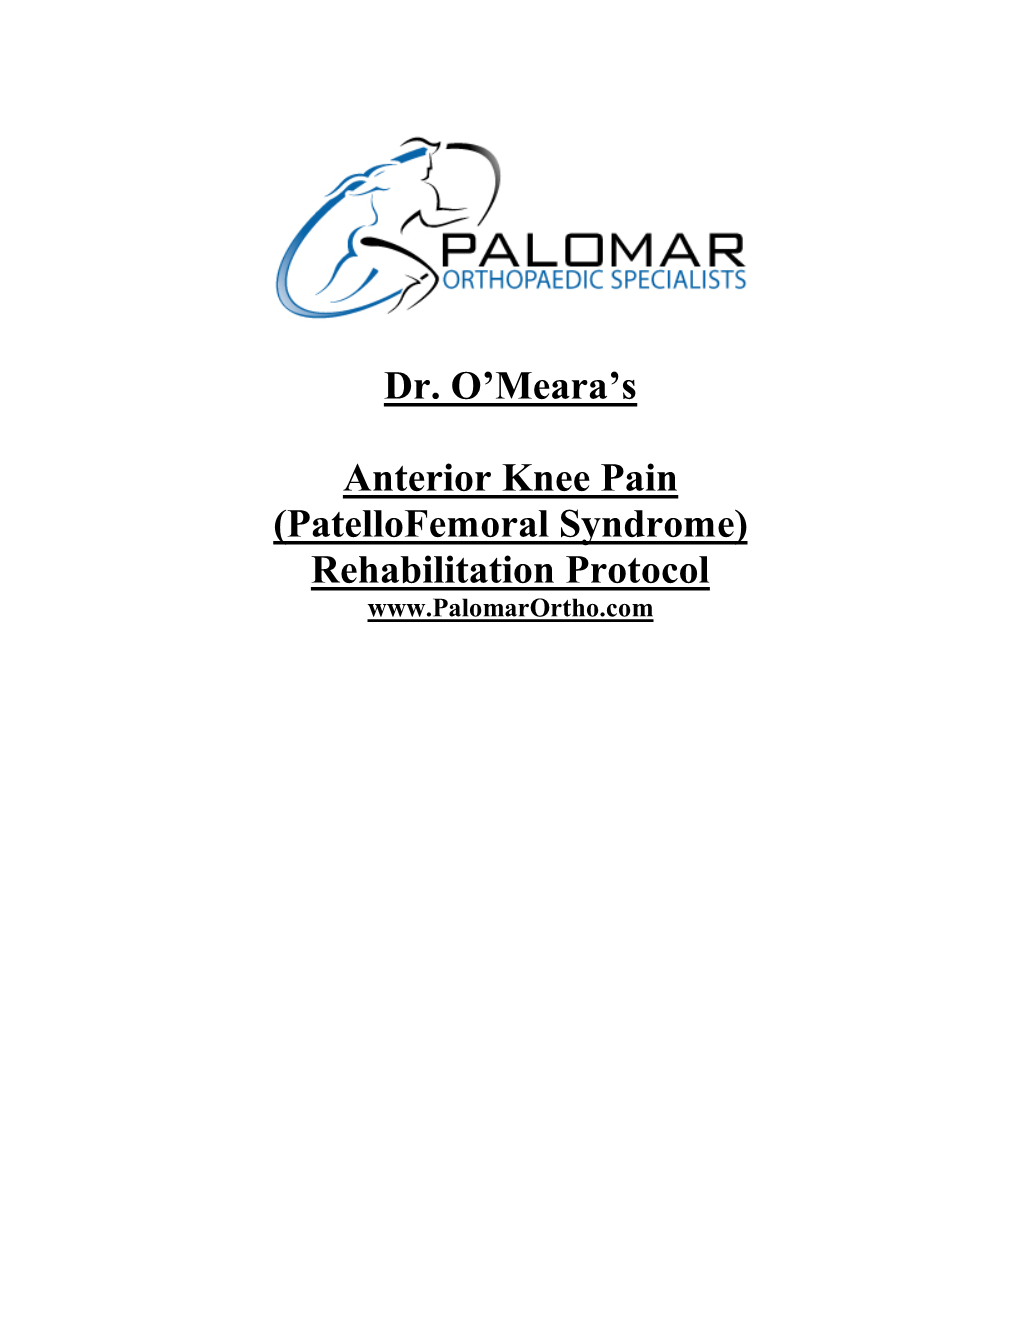 Dr. O'meara's Anterior Knee Pain (Patellofemoral Syndrome) Rehabilitation Protocol